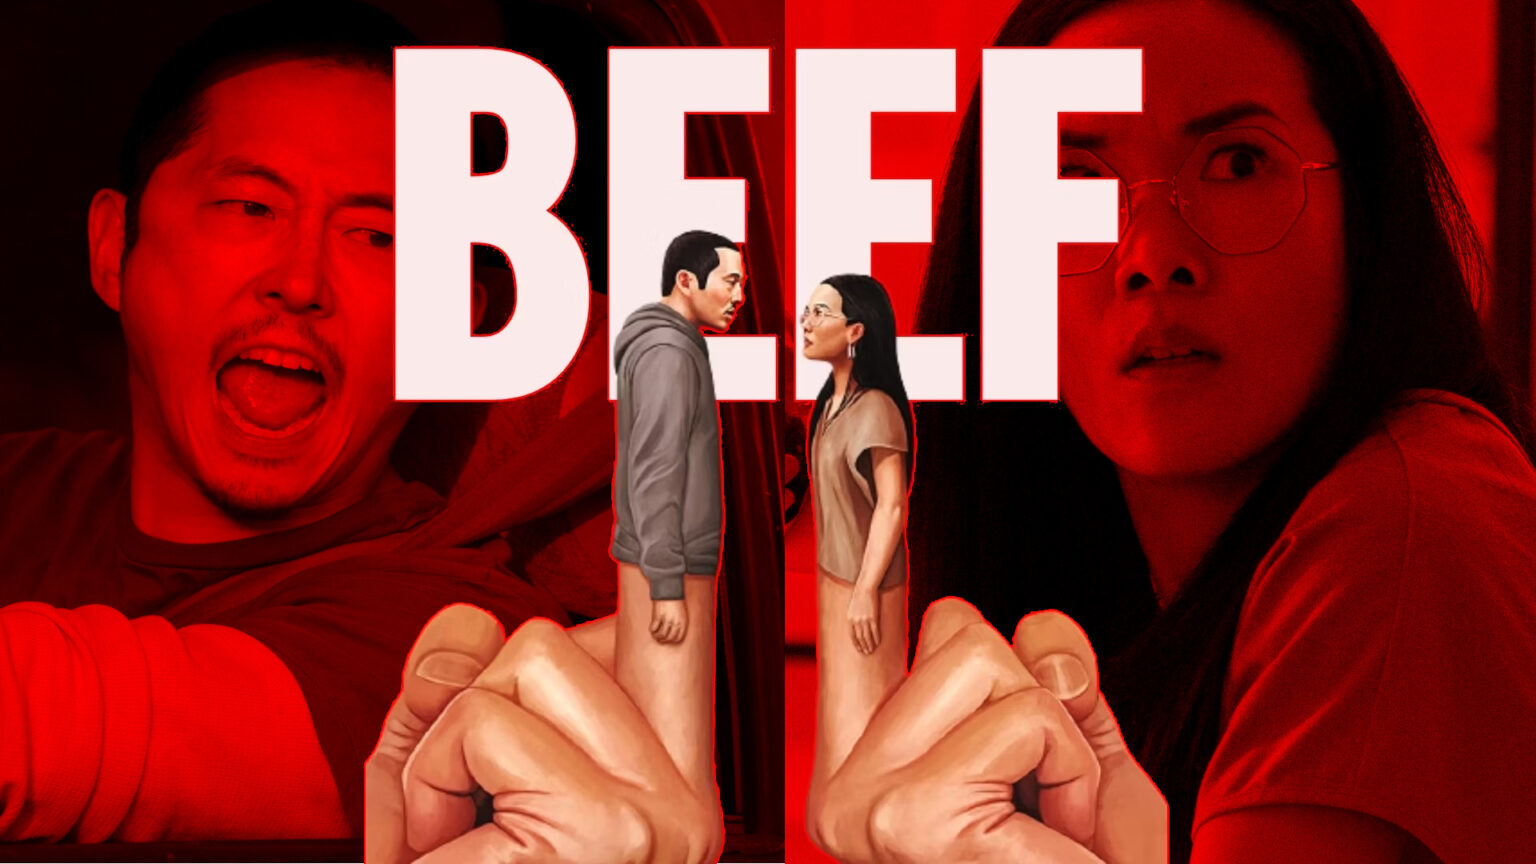 Beef Review Steven Yuen Ali Wong Netflix The Movie Blog The Movie Blog